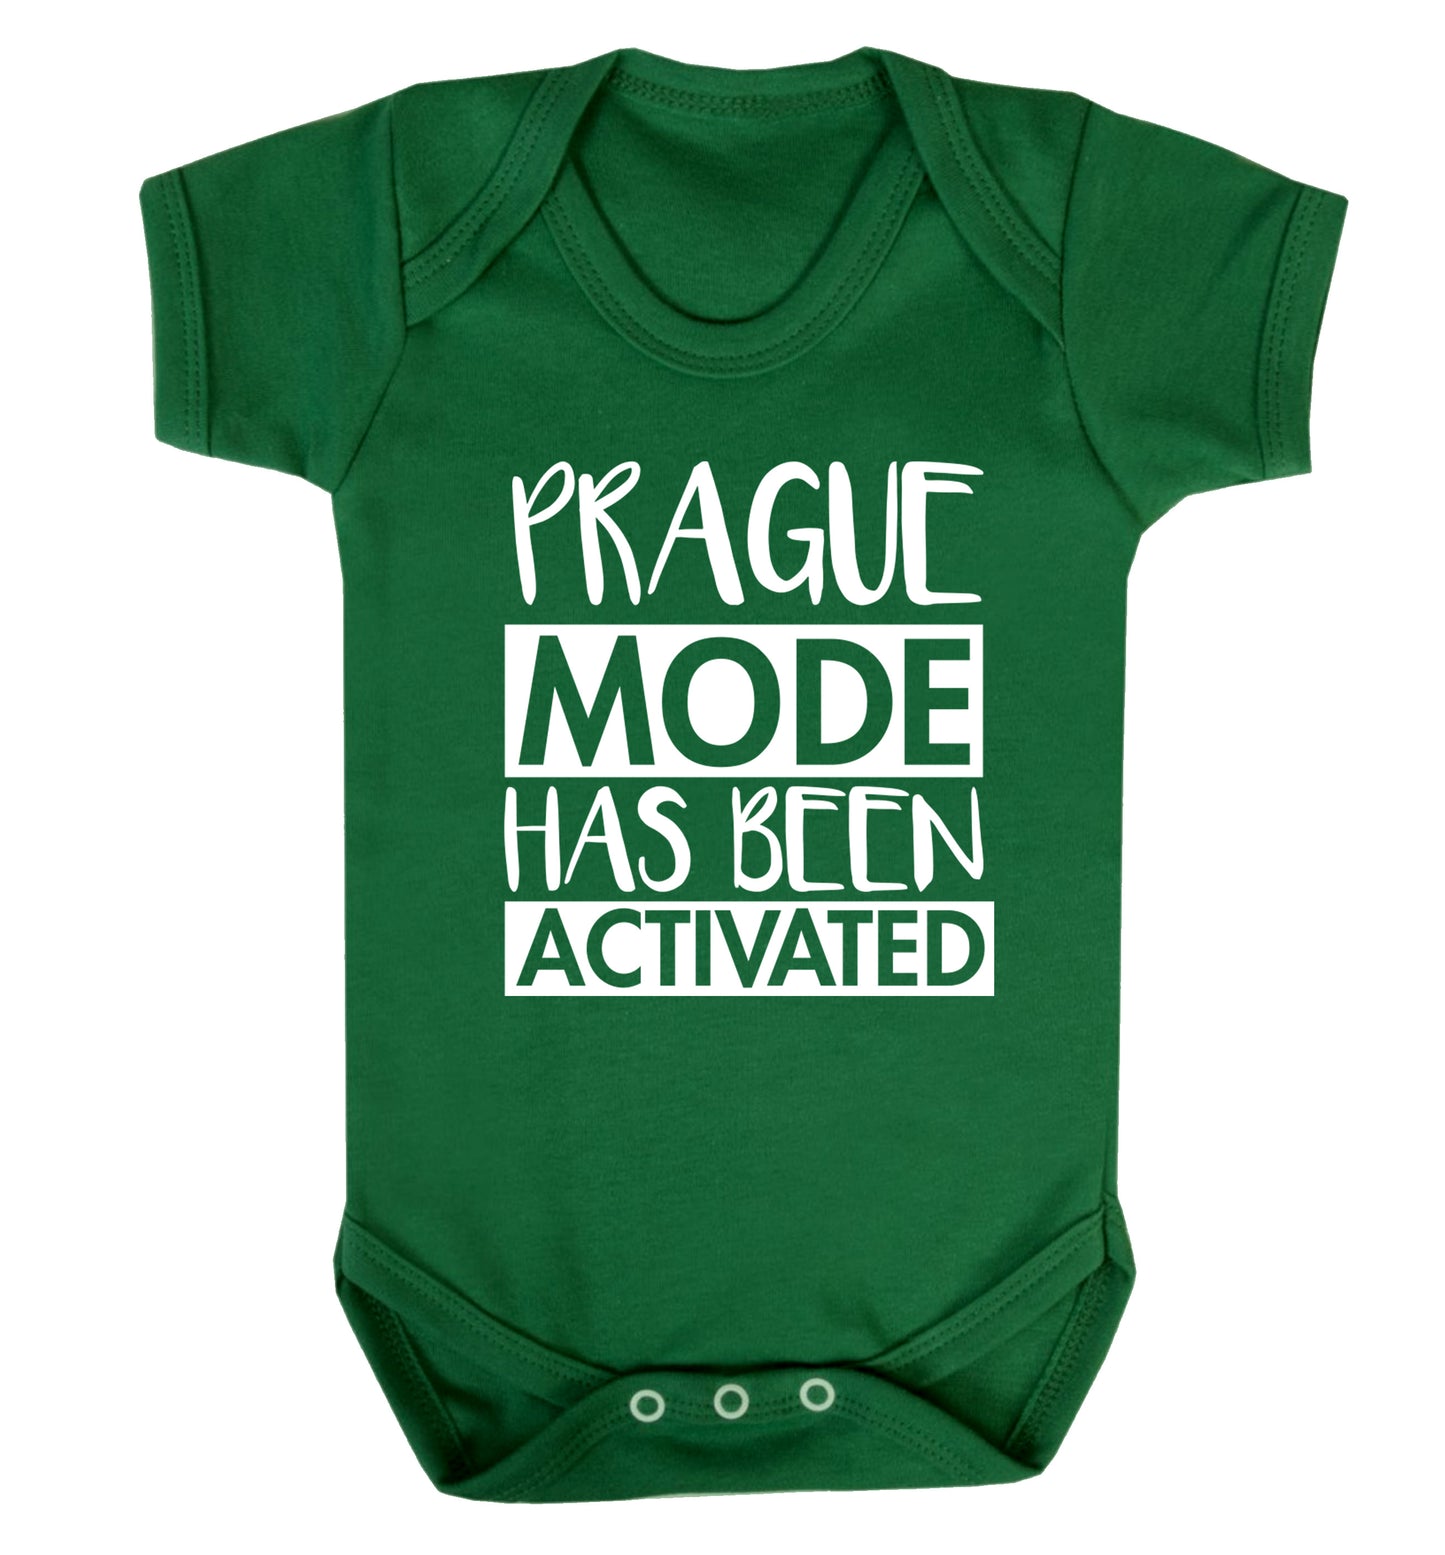 Prague mode has been activated Baby Vest green 18-24 months